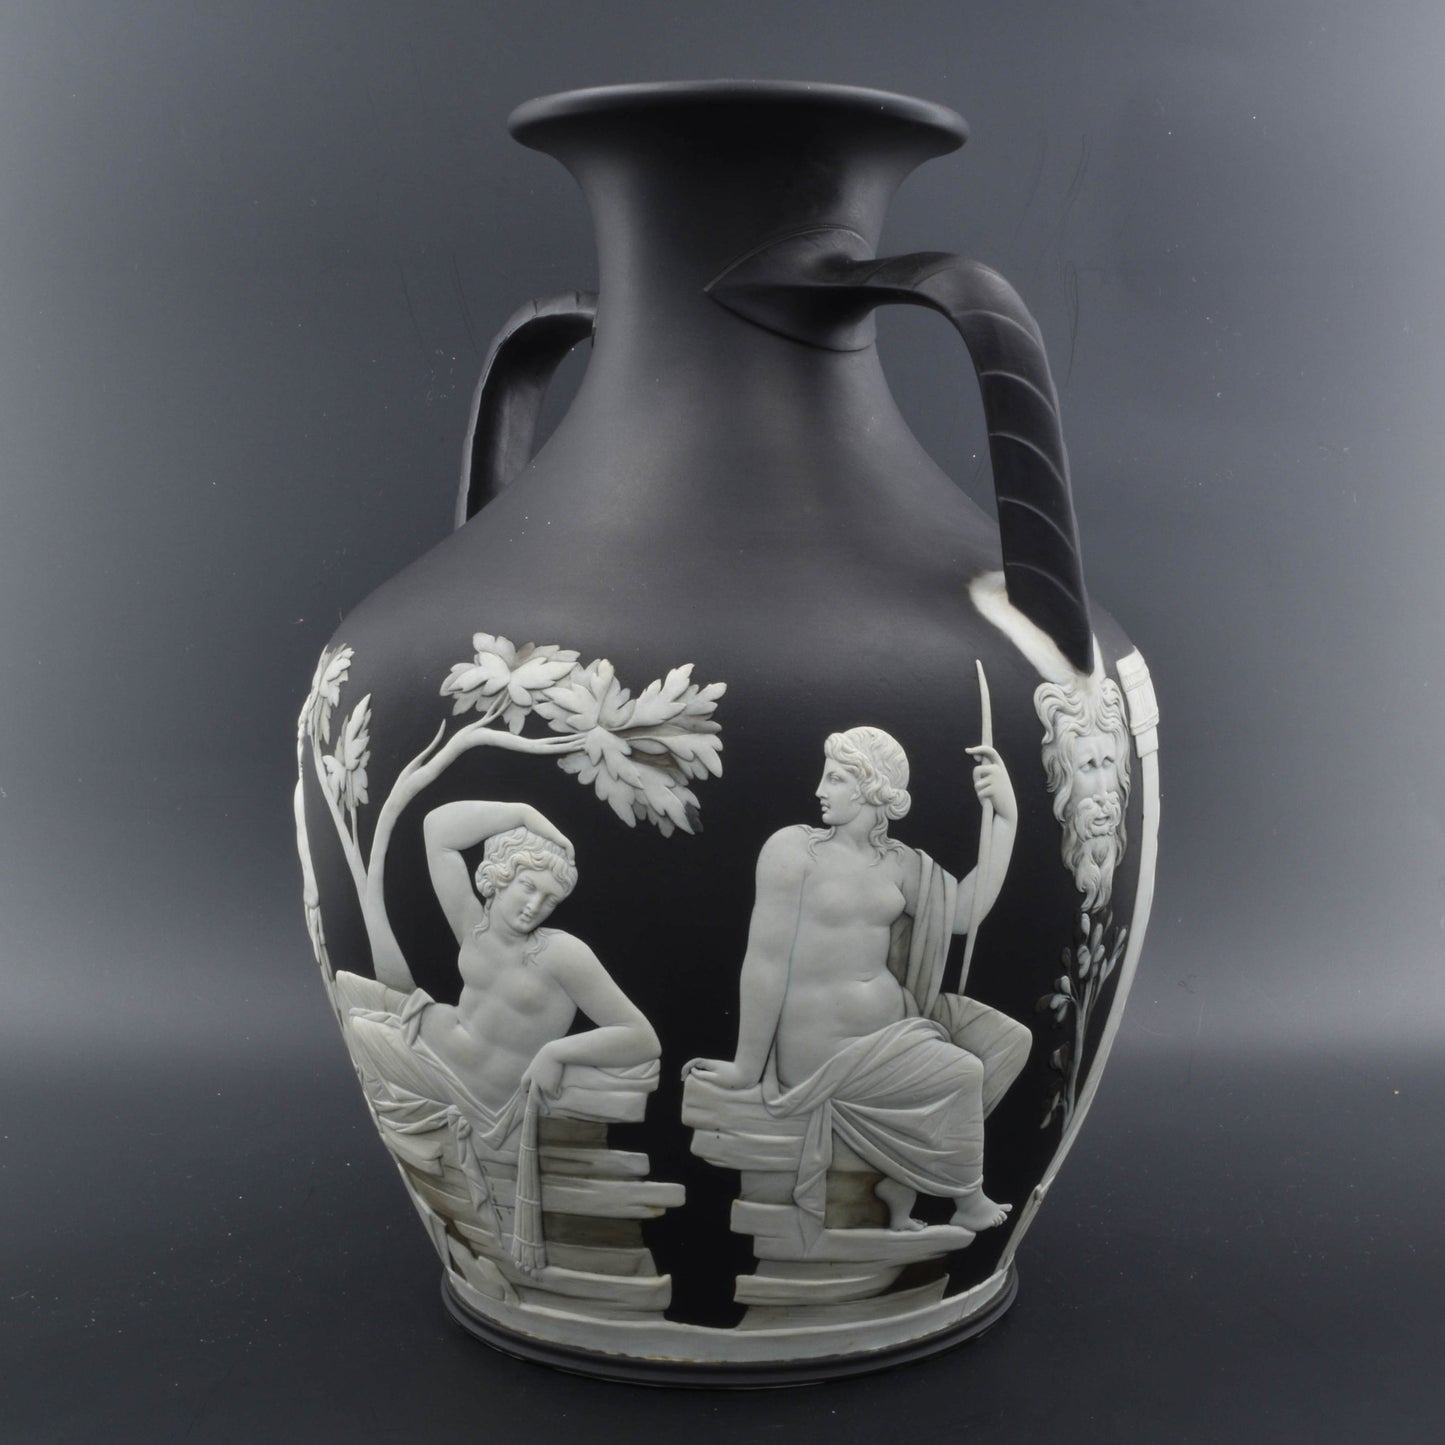 Portland Vase: First Edition #11